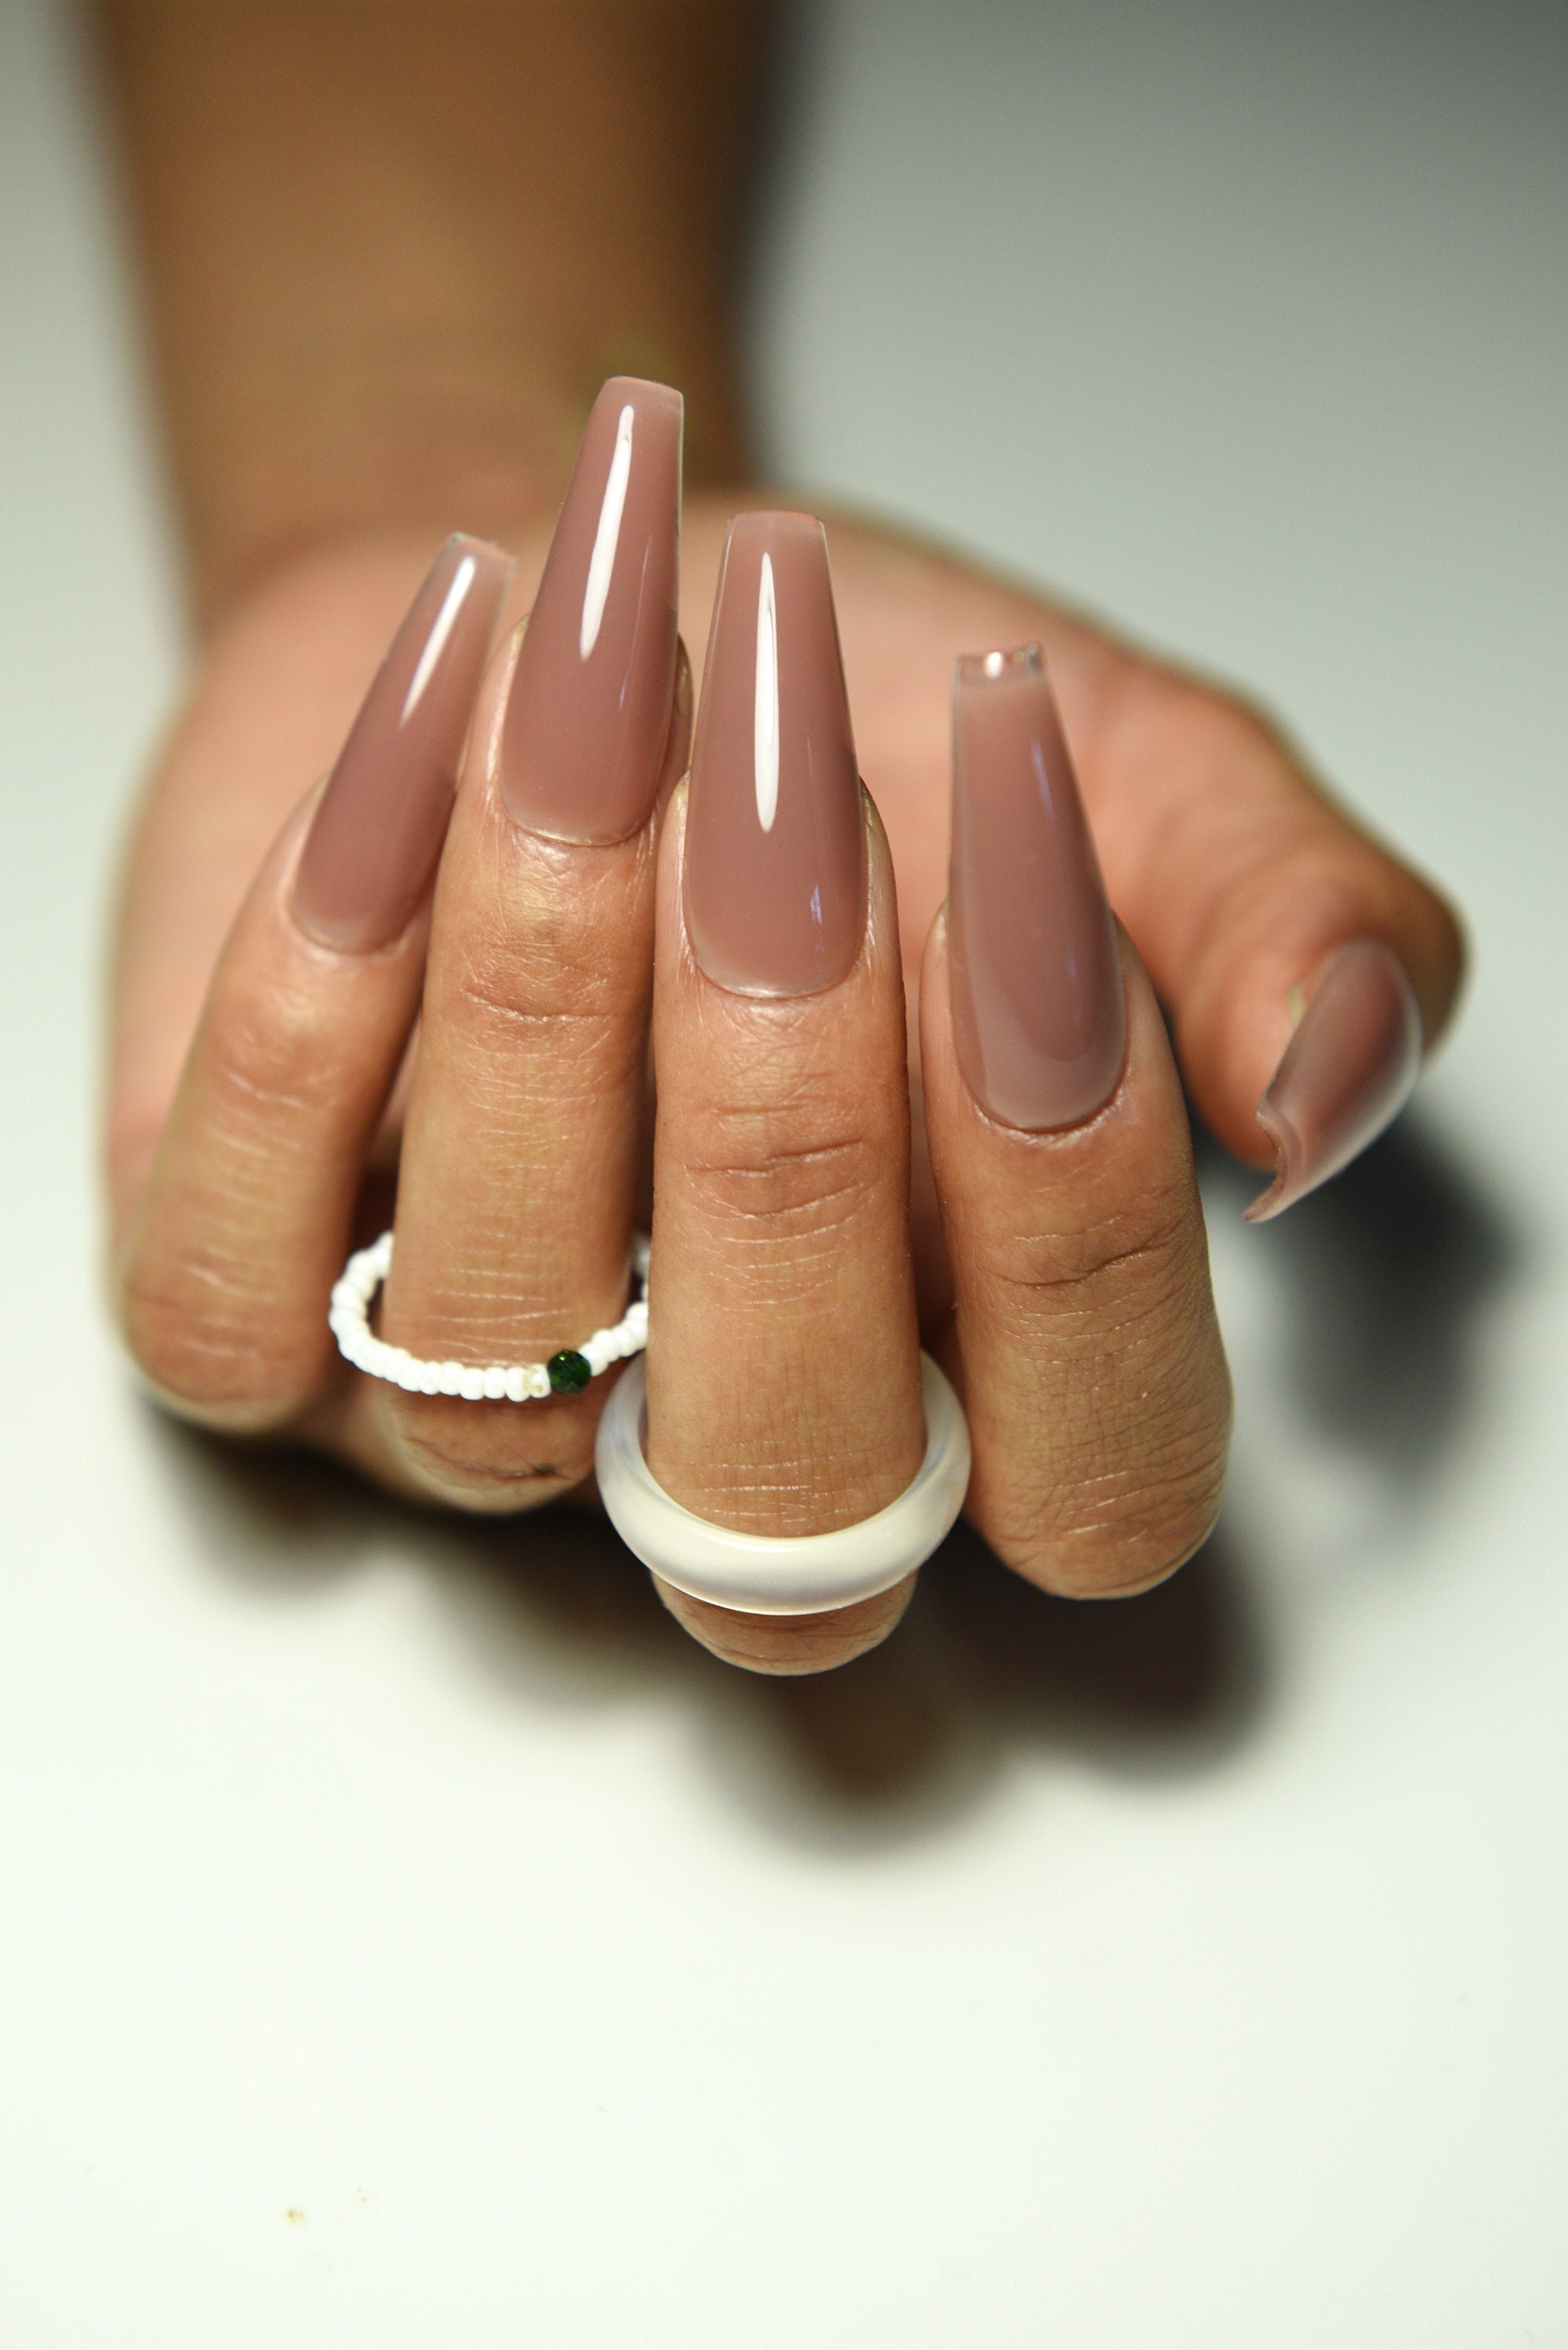 Press-on Marble False Nails - Detachable Ballerina Nail Manicure  Accessories 24p | eBay